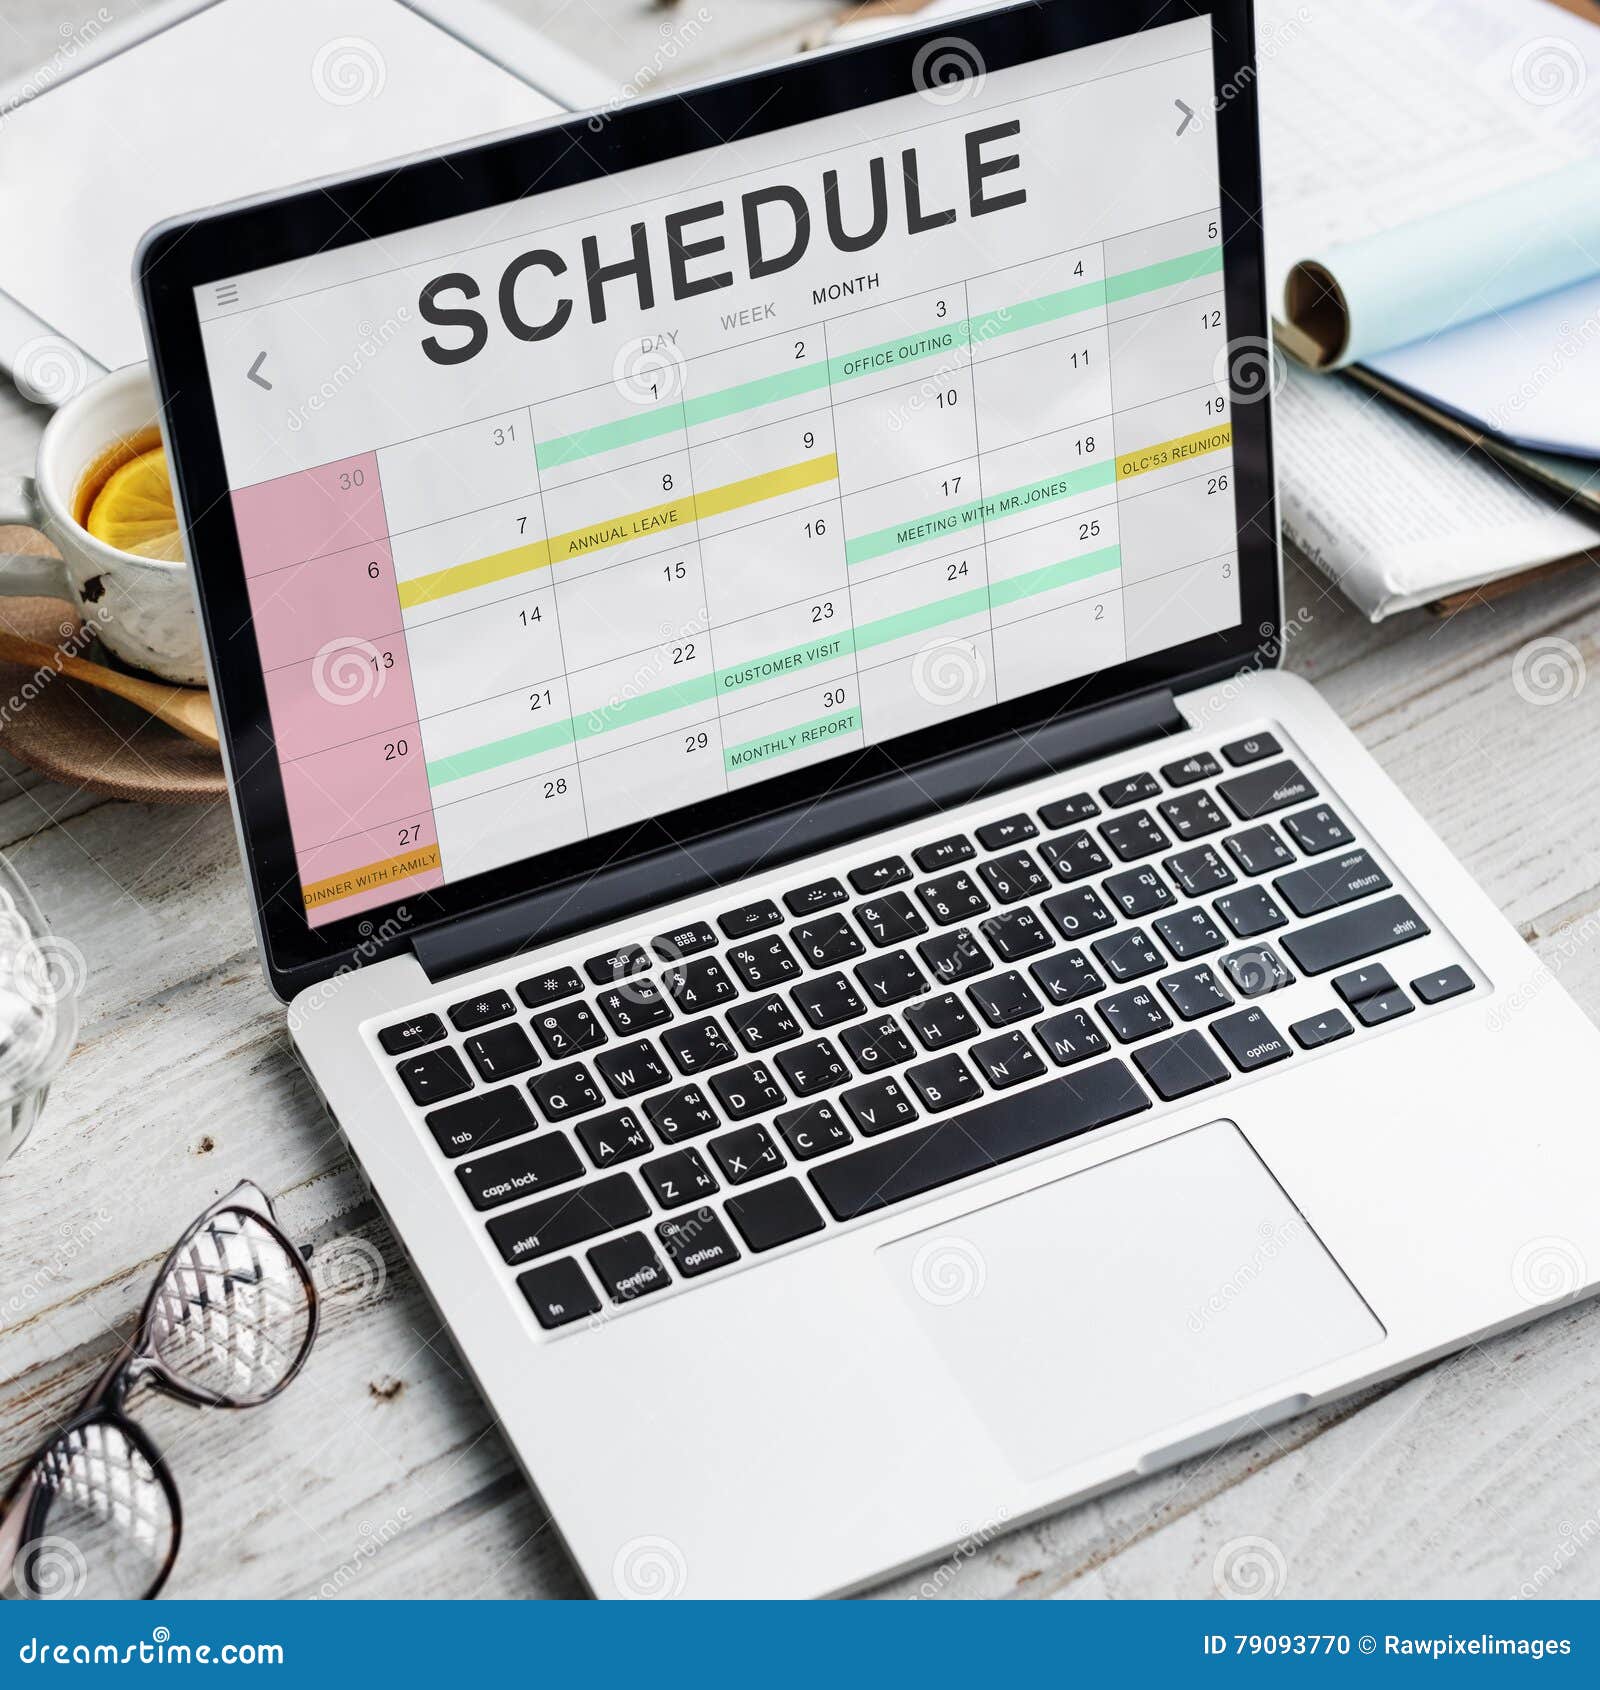 schedule activity calendar appointment concept